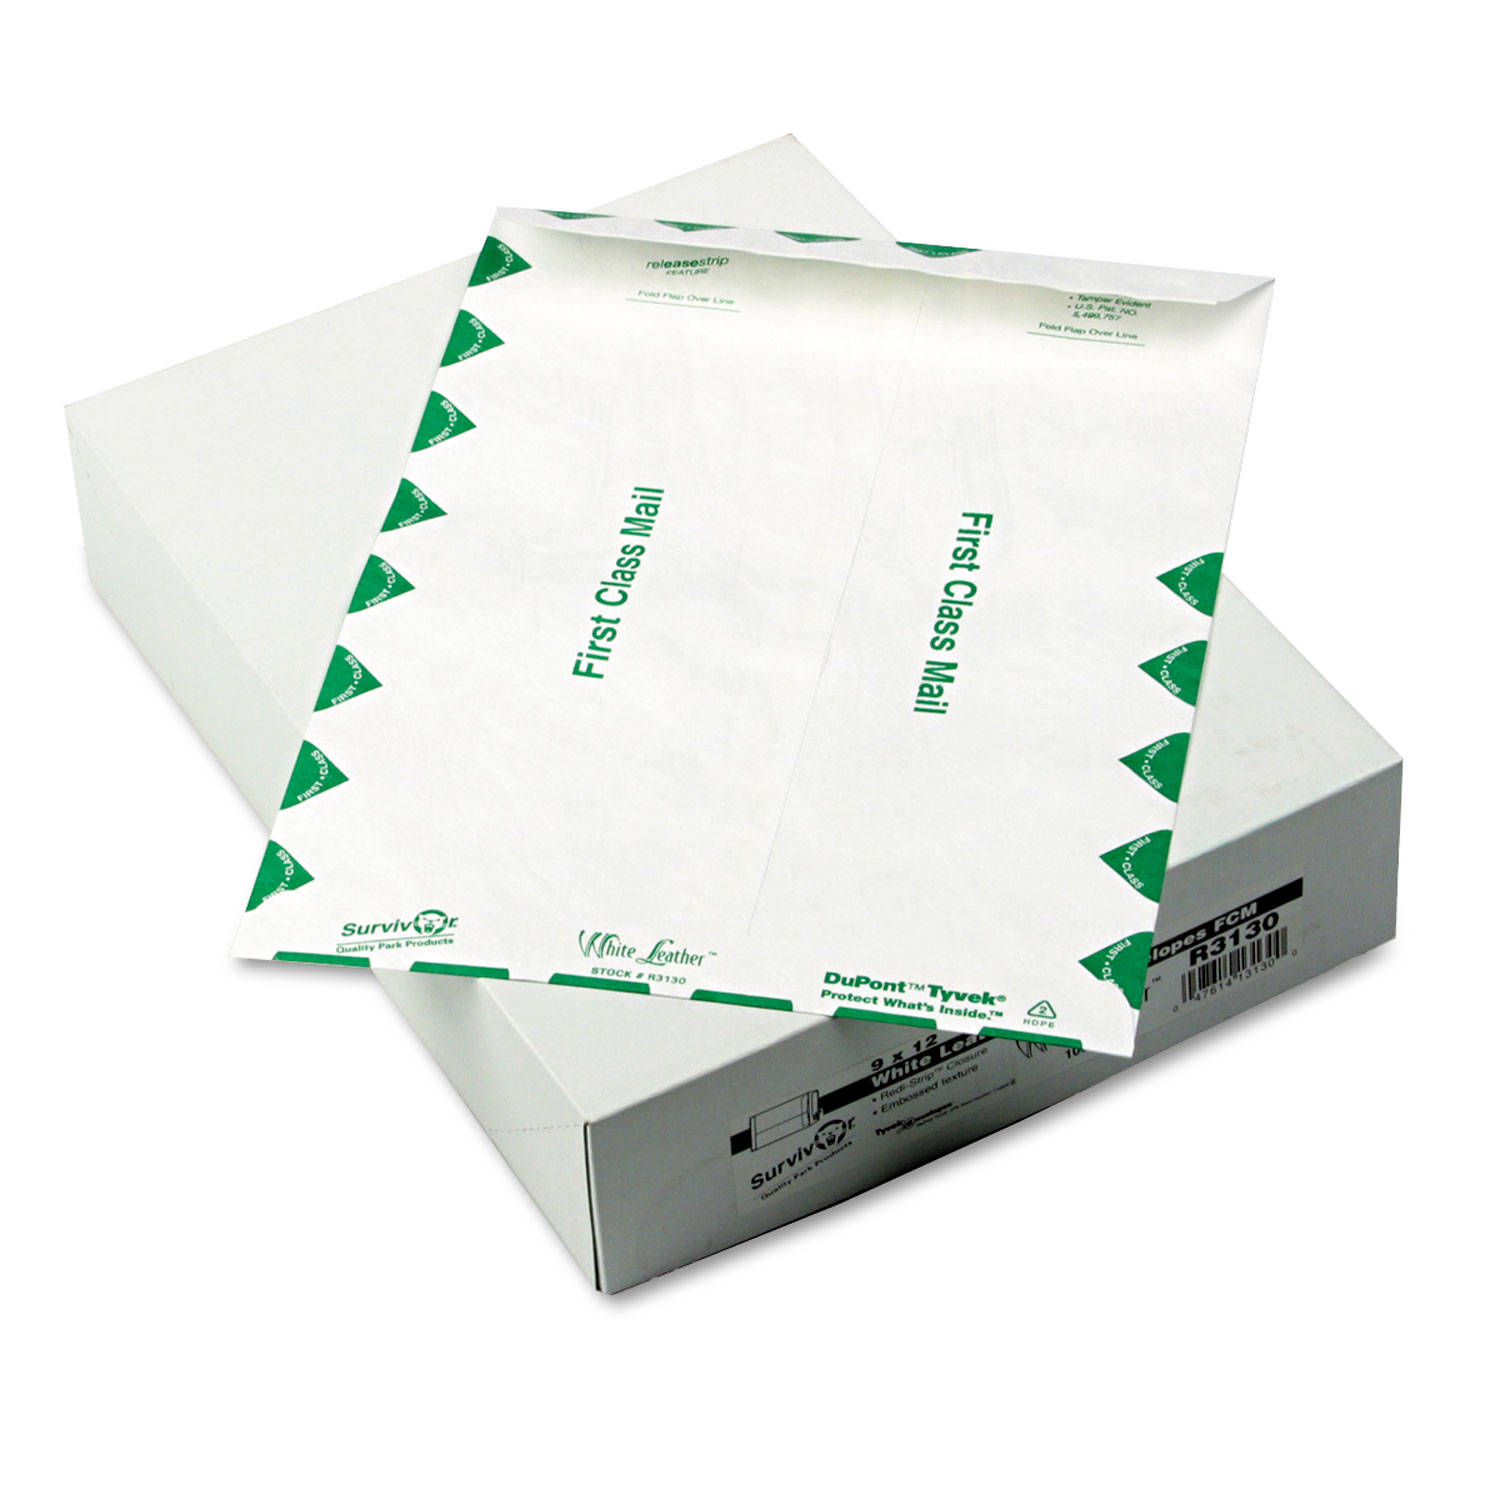  Survivor QUAR3130 White Leather Envelopes of DuPont Tyvek, #10 1/2, Cheese Blade Flap, Self-Adhesive Closure, 9 x 12, White, 100/Box (QUAR3130) 